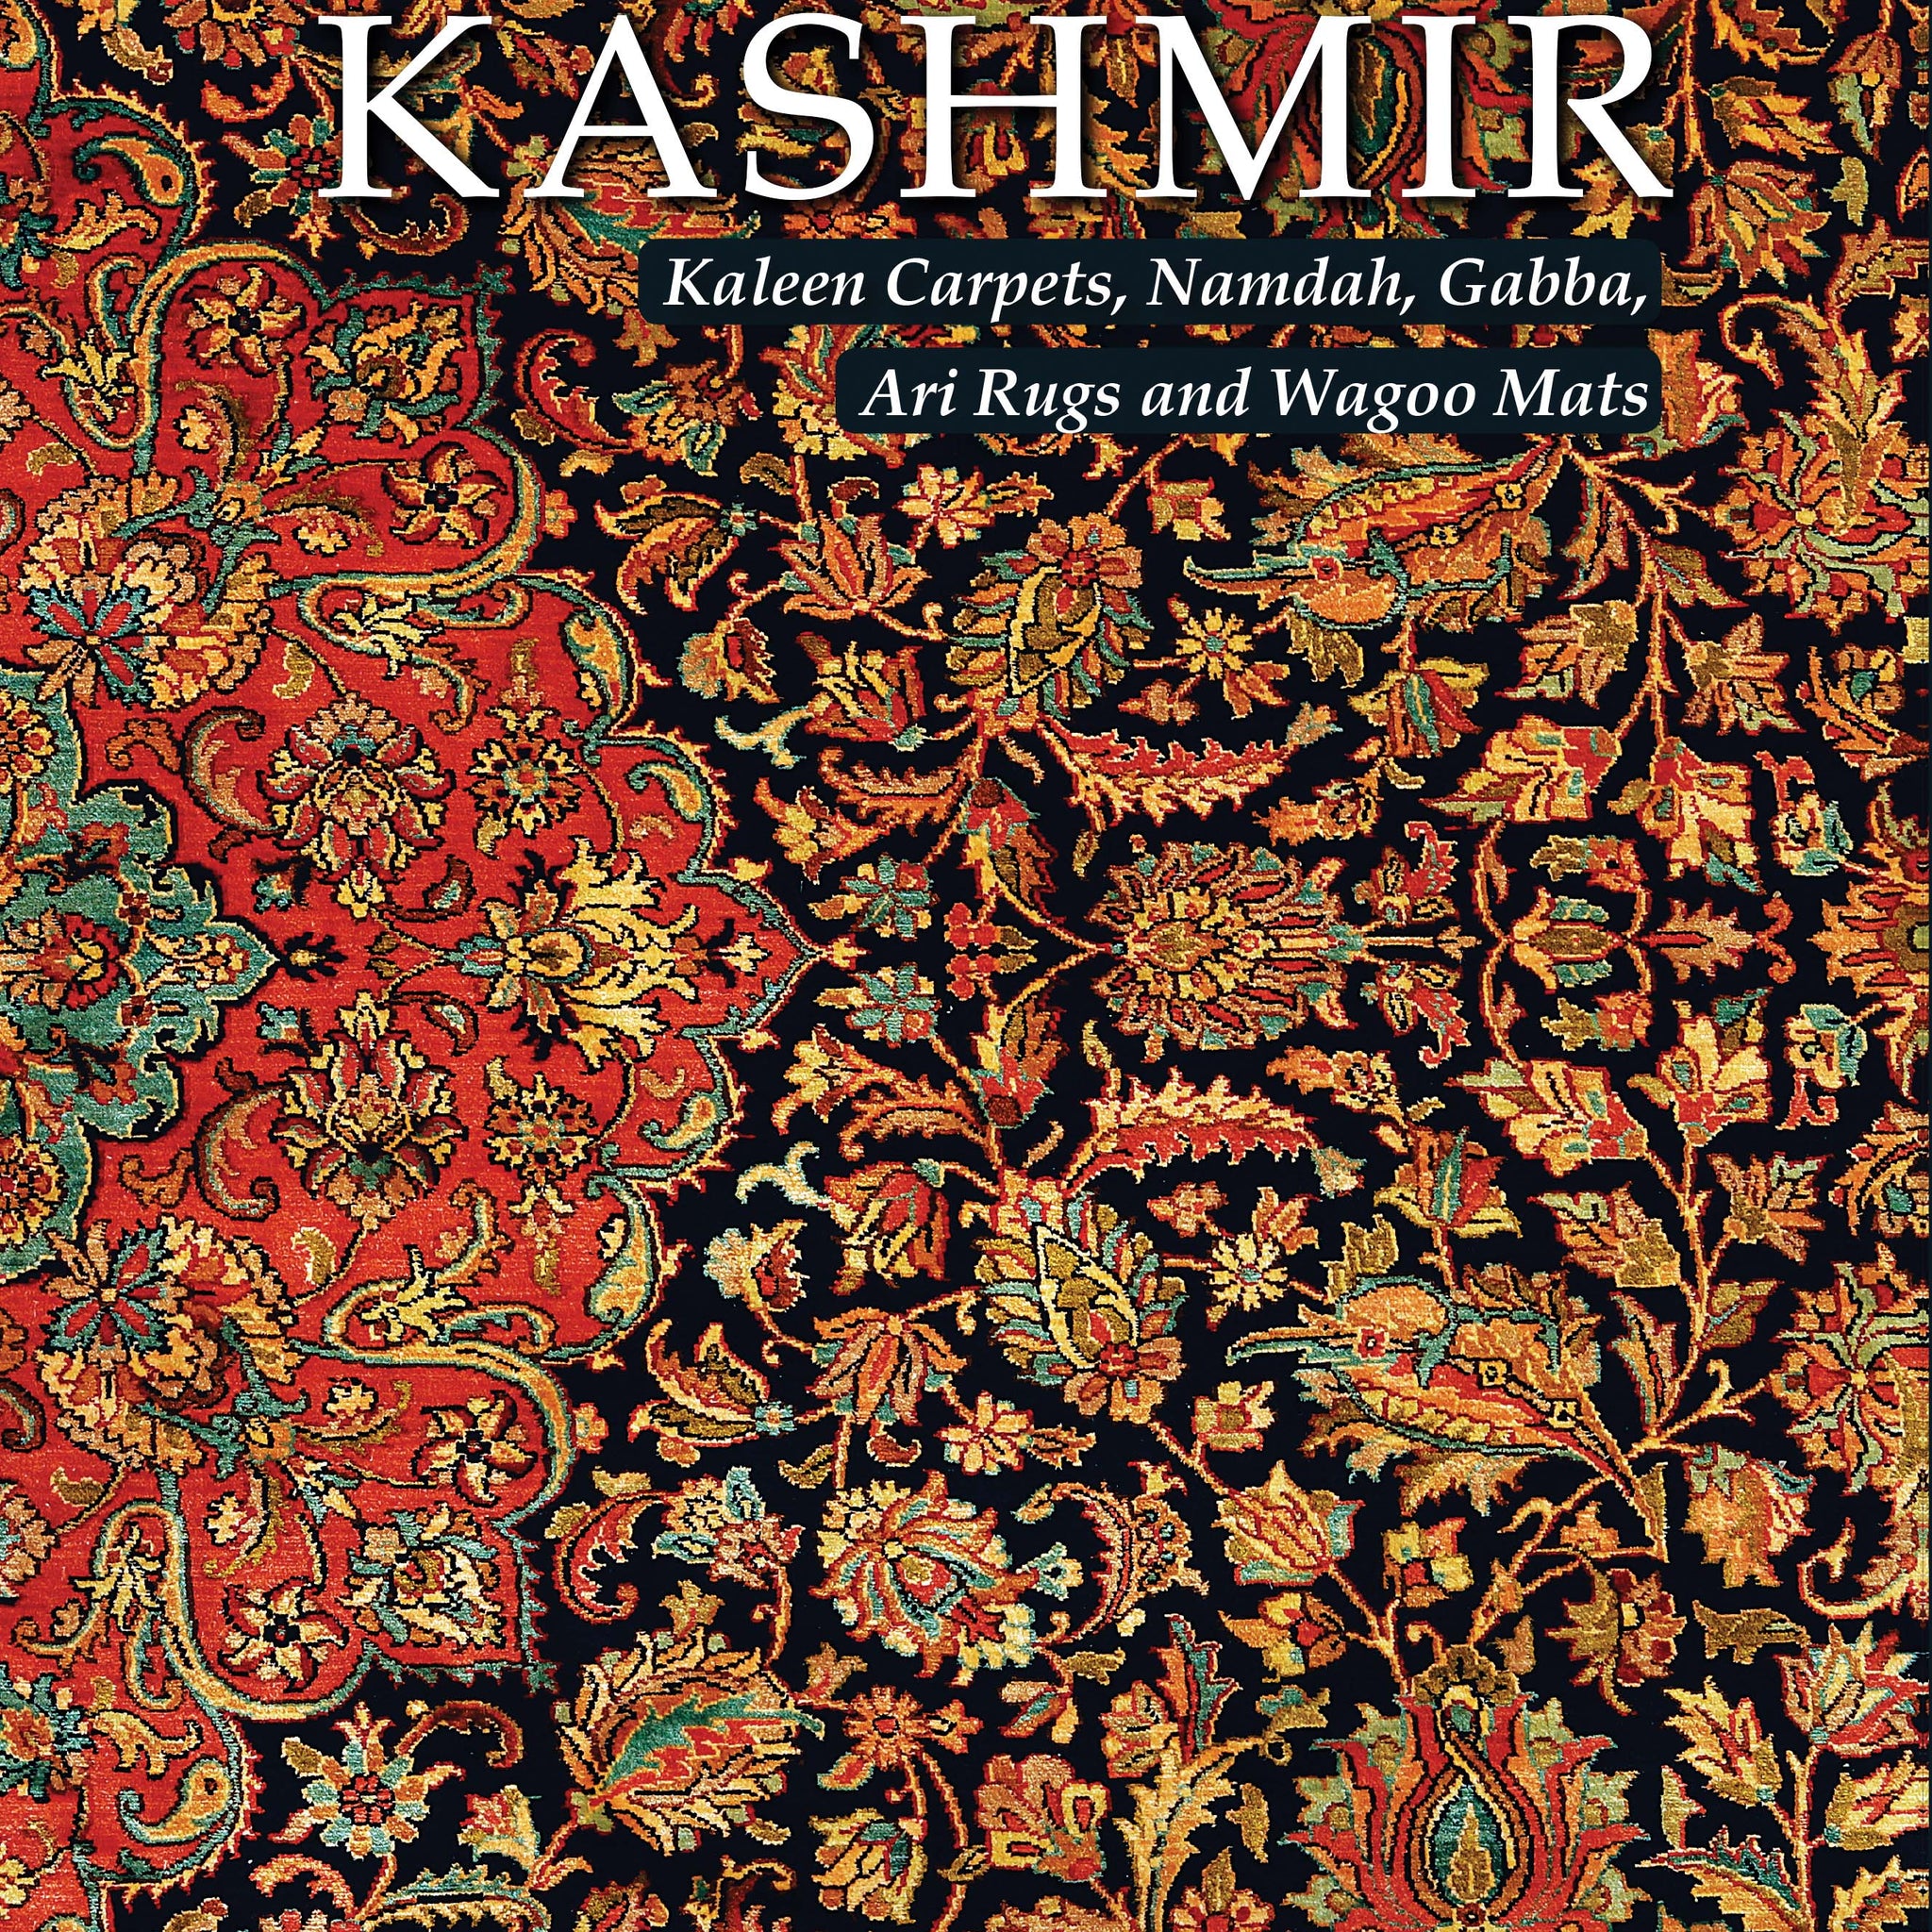 Floor Coverings From Kashmir: Kaleen Carpets, Namdah, Gabba, Ari Rugs And Wagoo Mats (H.B)